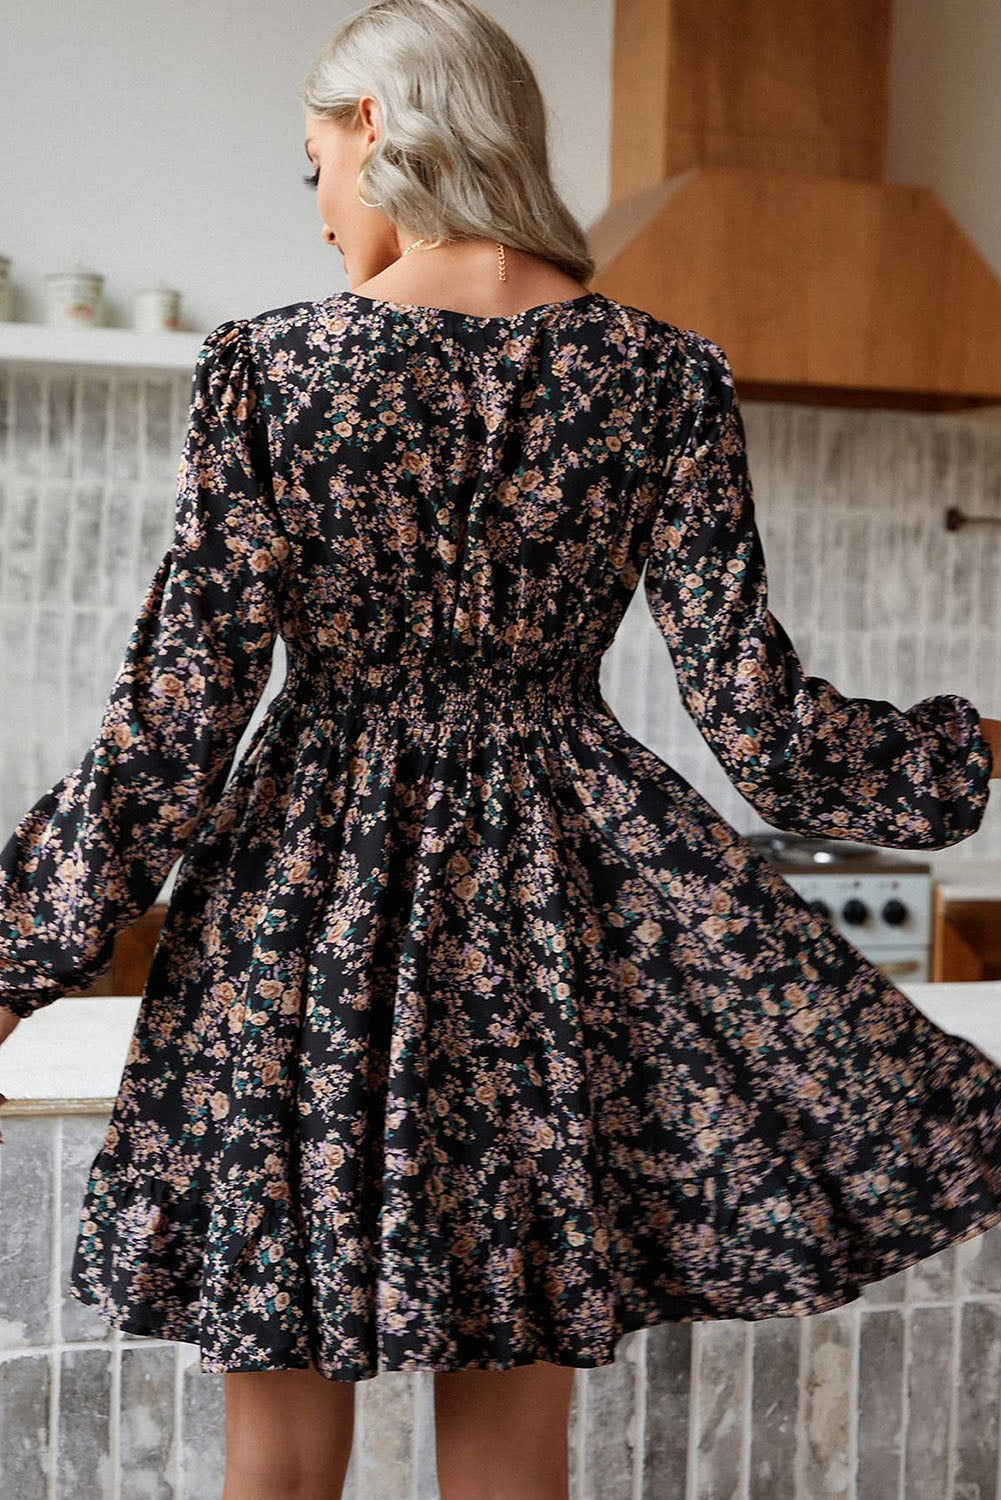 Floral Print Lace Contrast Casual Black Mini Dress